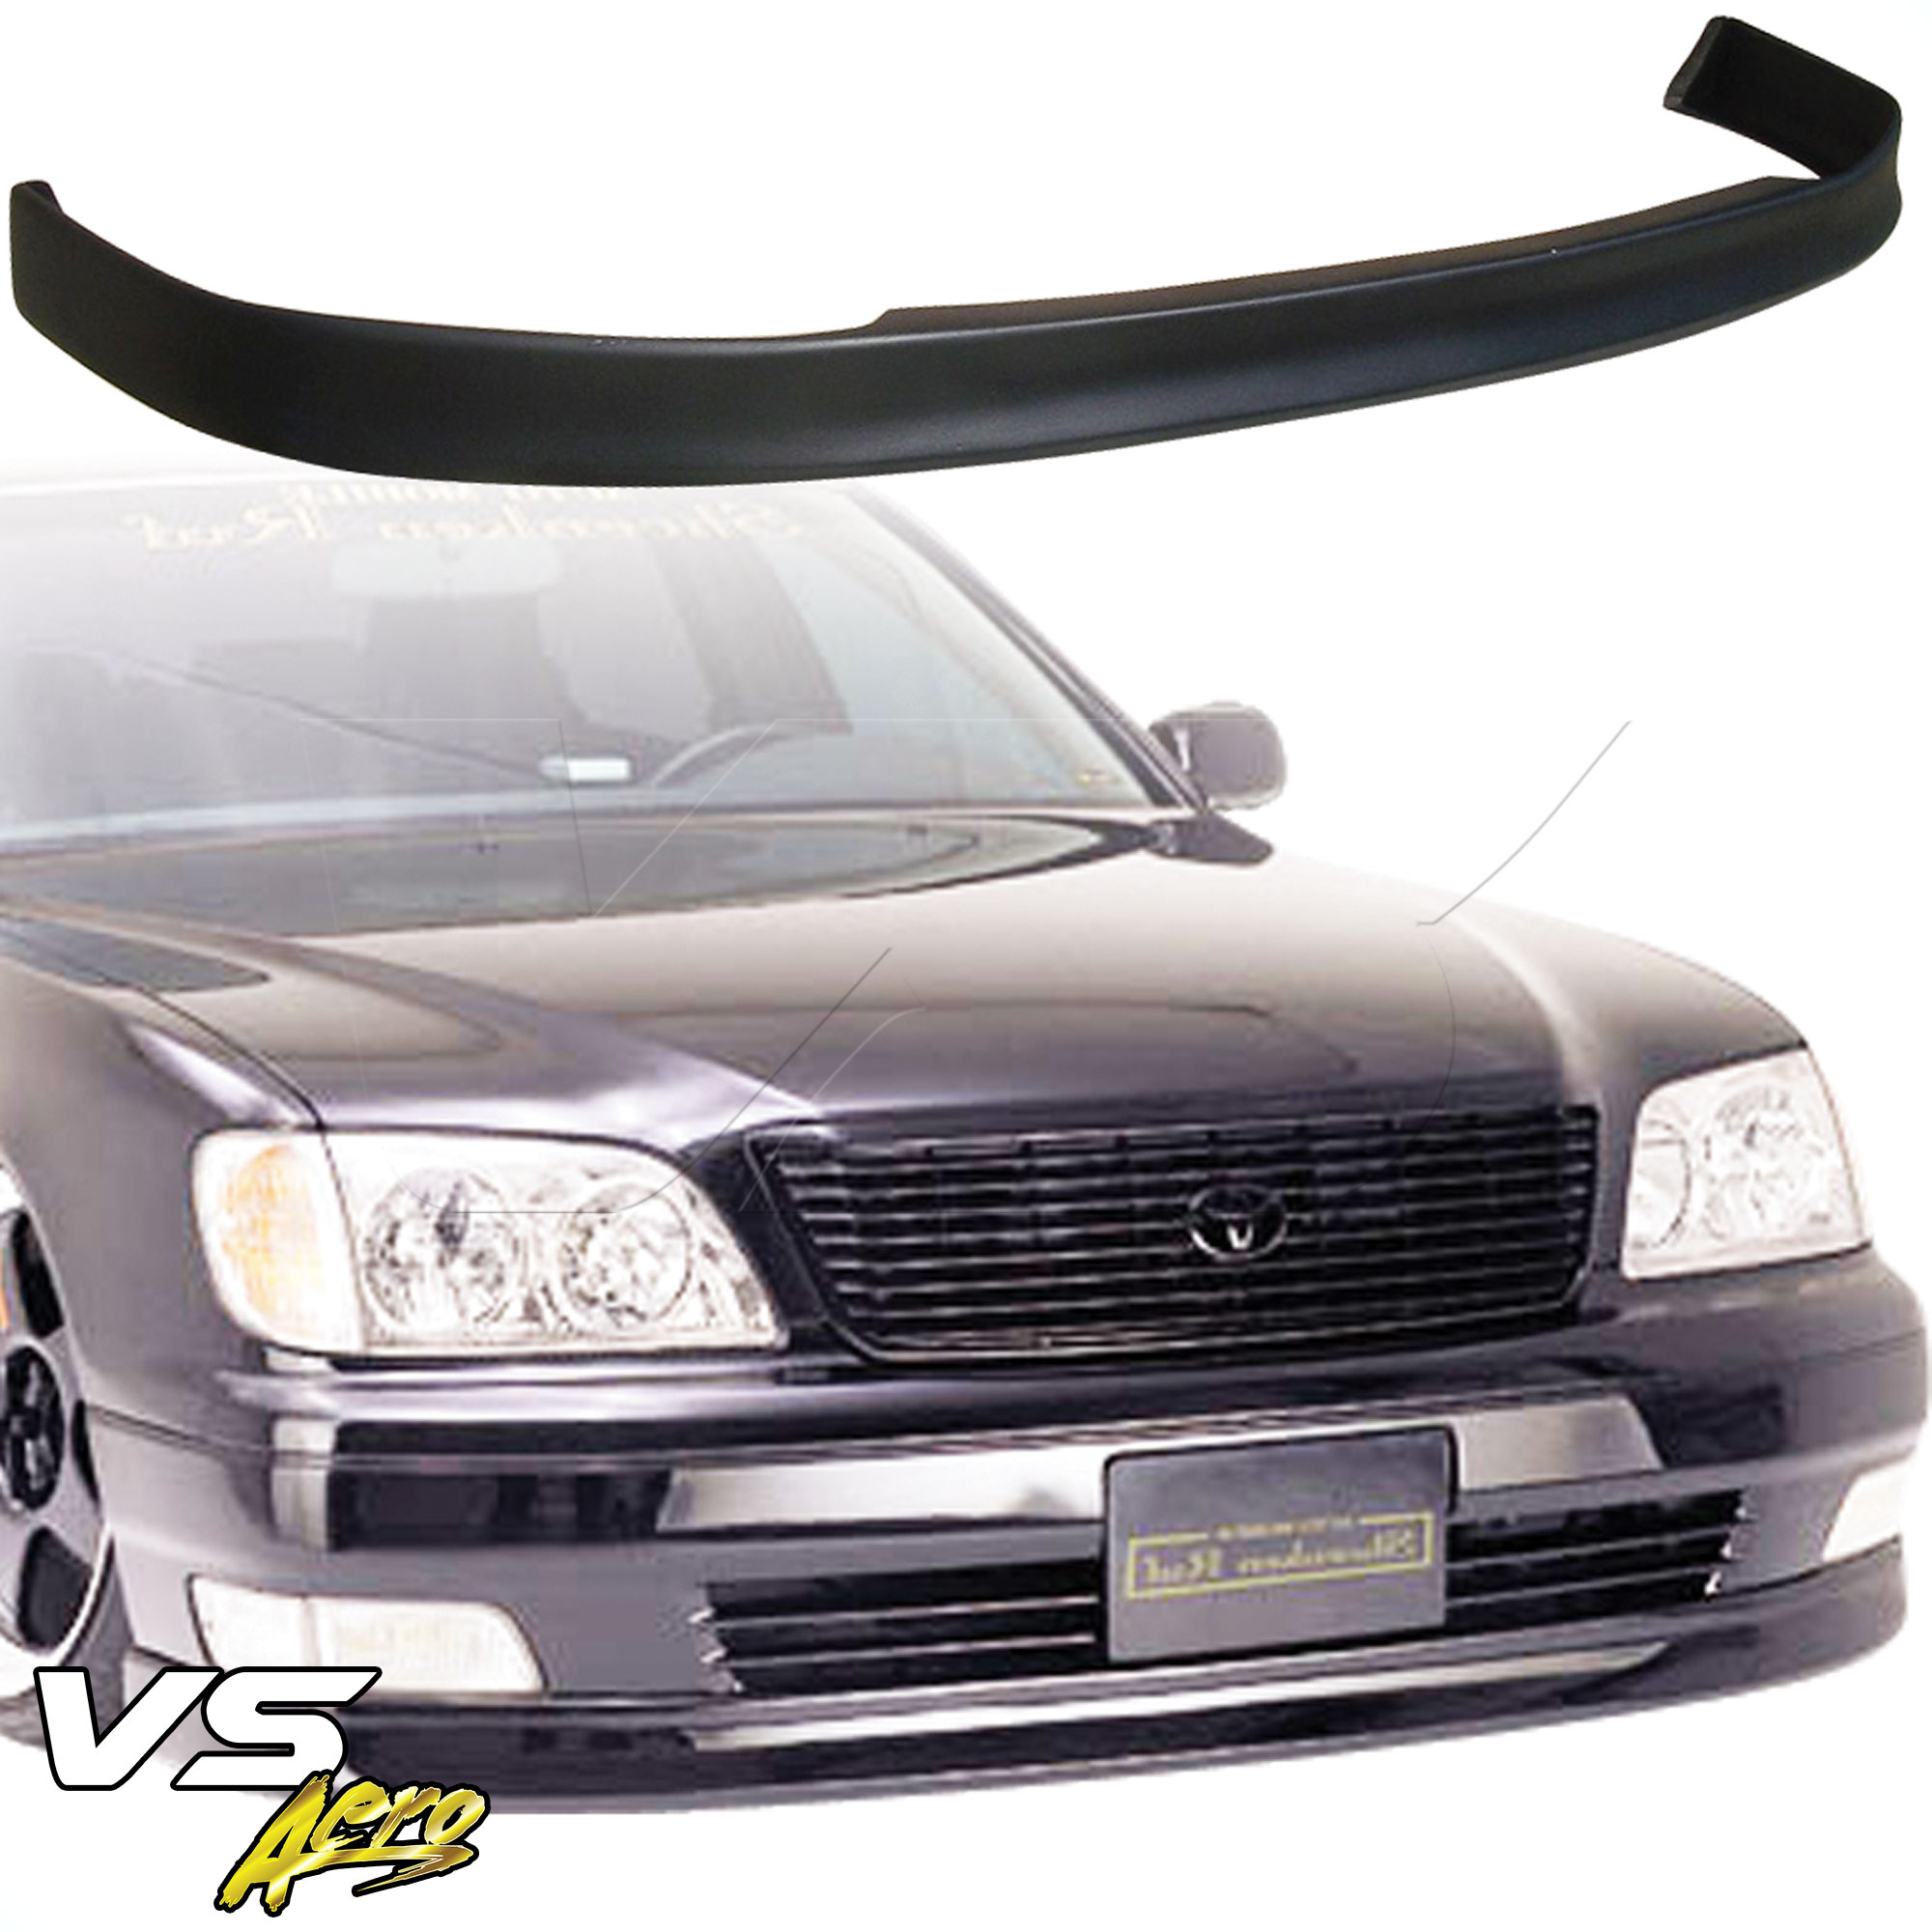 VSaero FRP FKON Front Lip Valance > Lexus LS400 UCF21 1998-2000 - Image 9